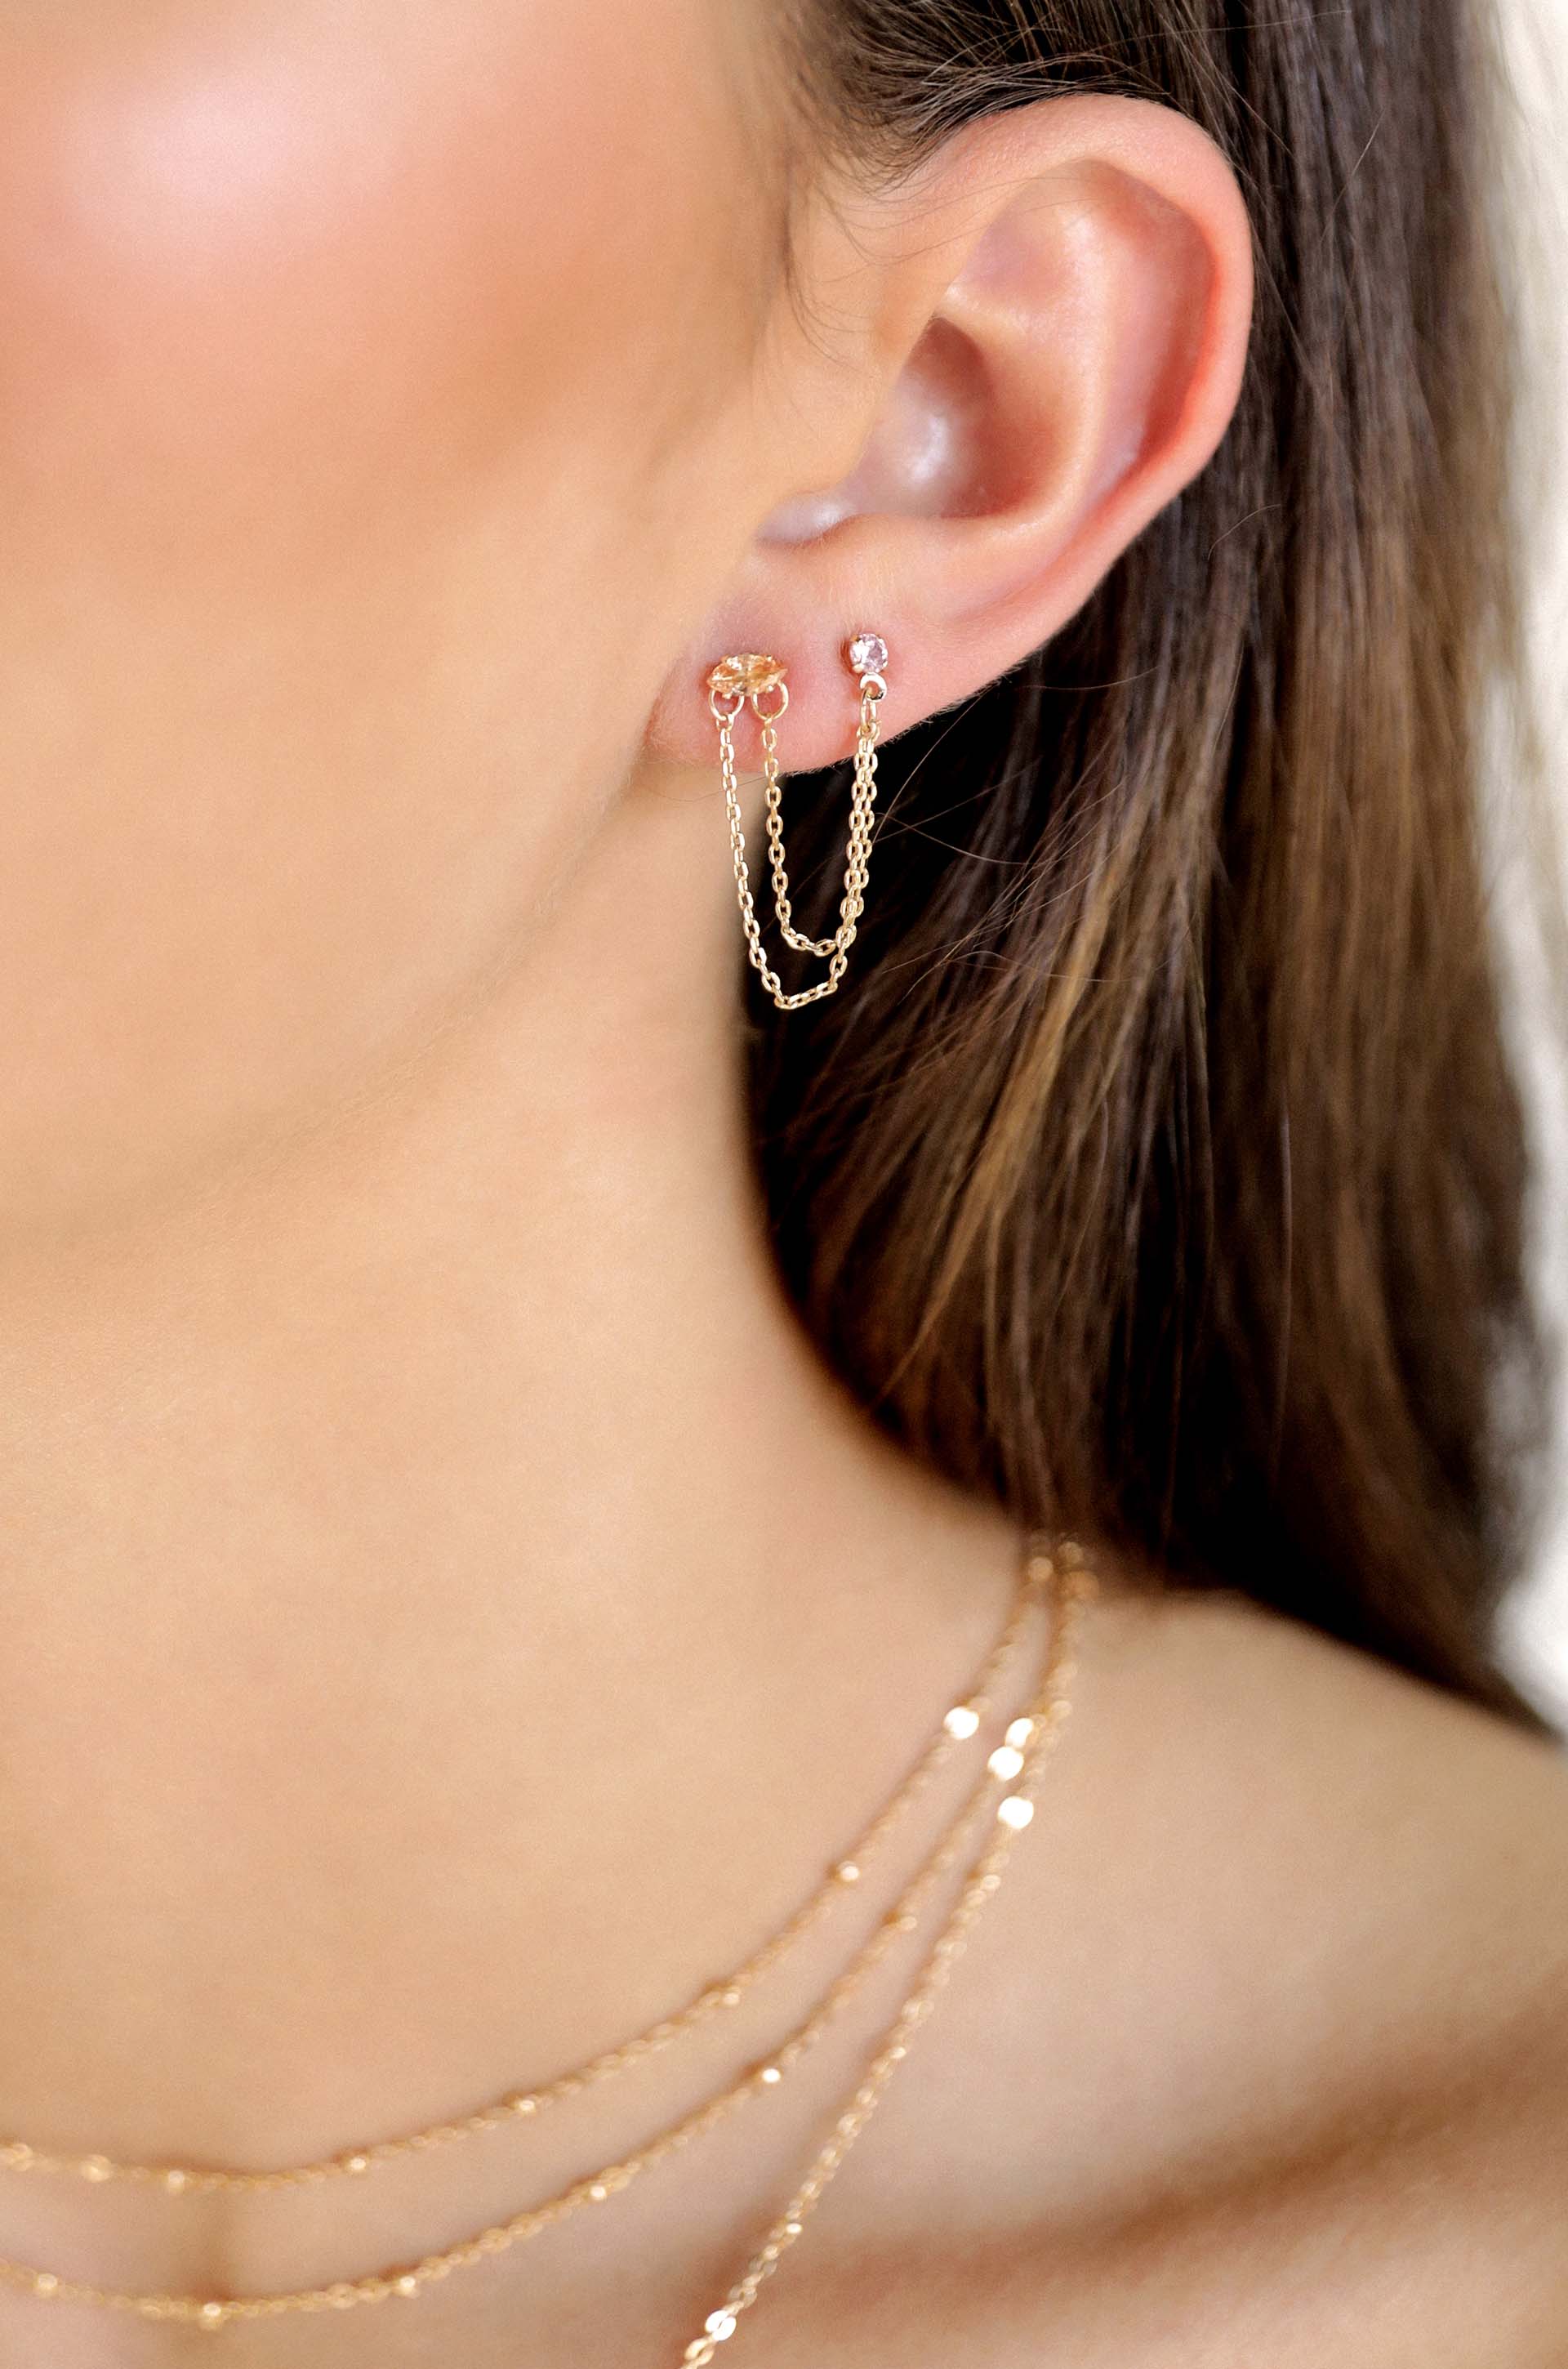 Double Piercing Chain Dangle Earrings in pink and light topaz on model